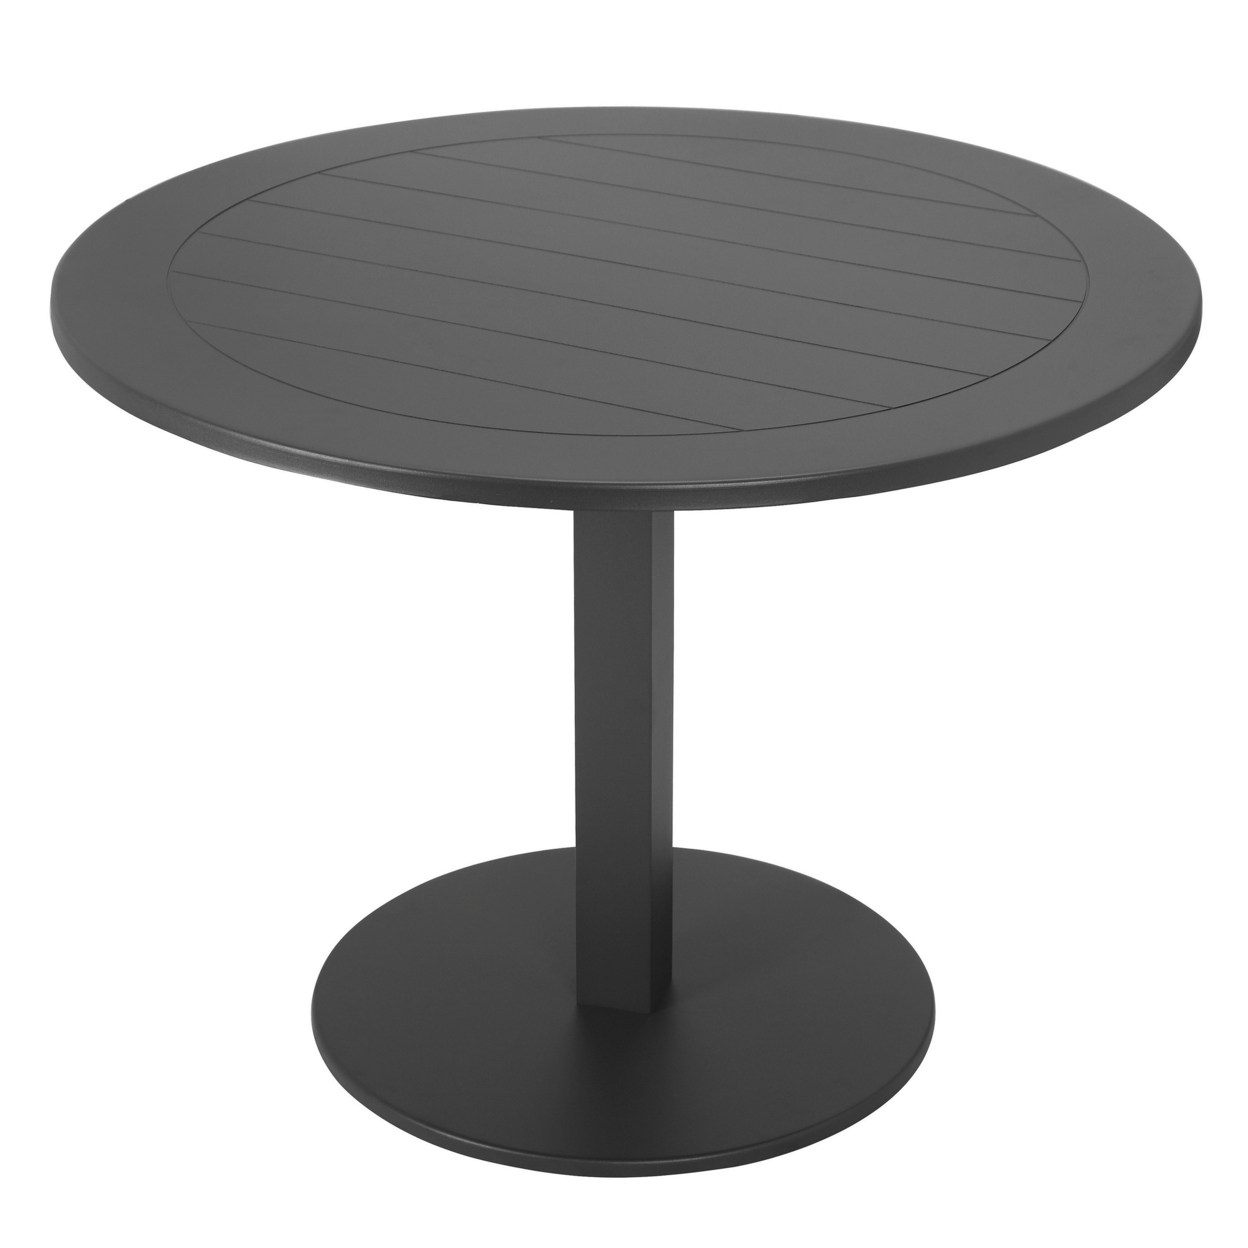 Keli 35 Inch Round Dining Table, Gray Aluminum Frame, Foldable Design- Saltoro Sherpi